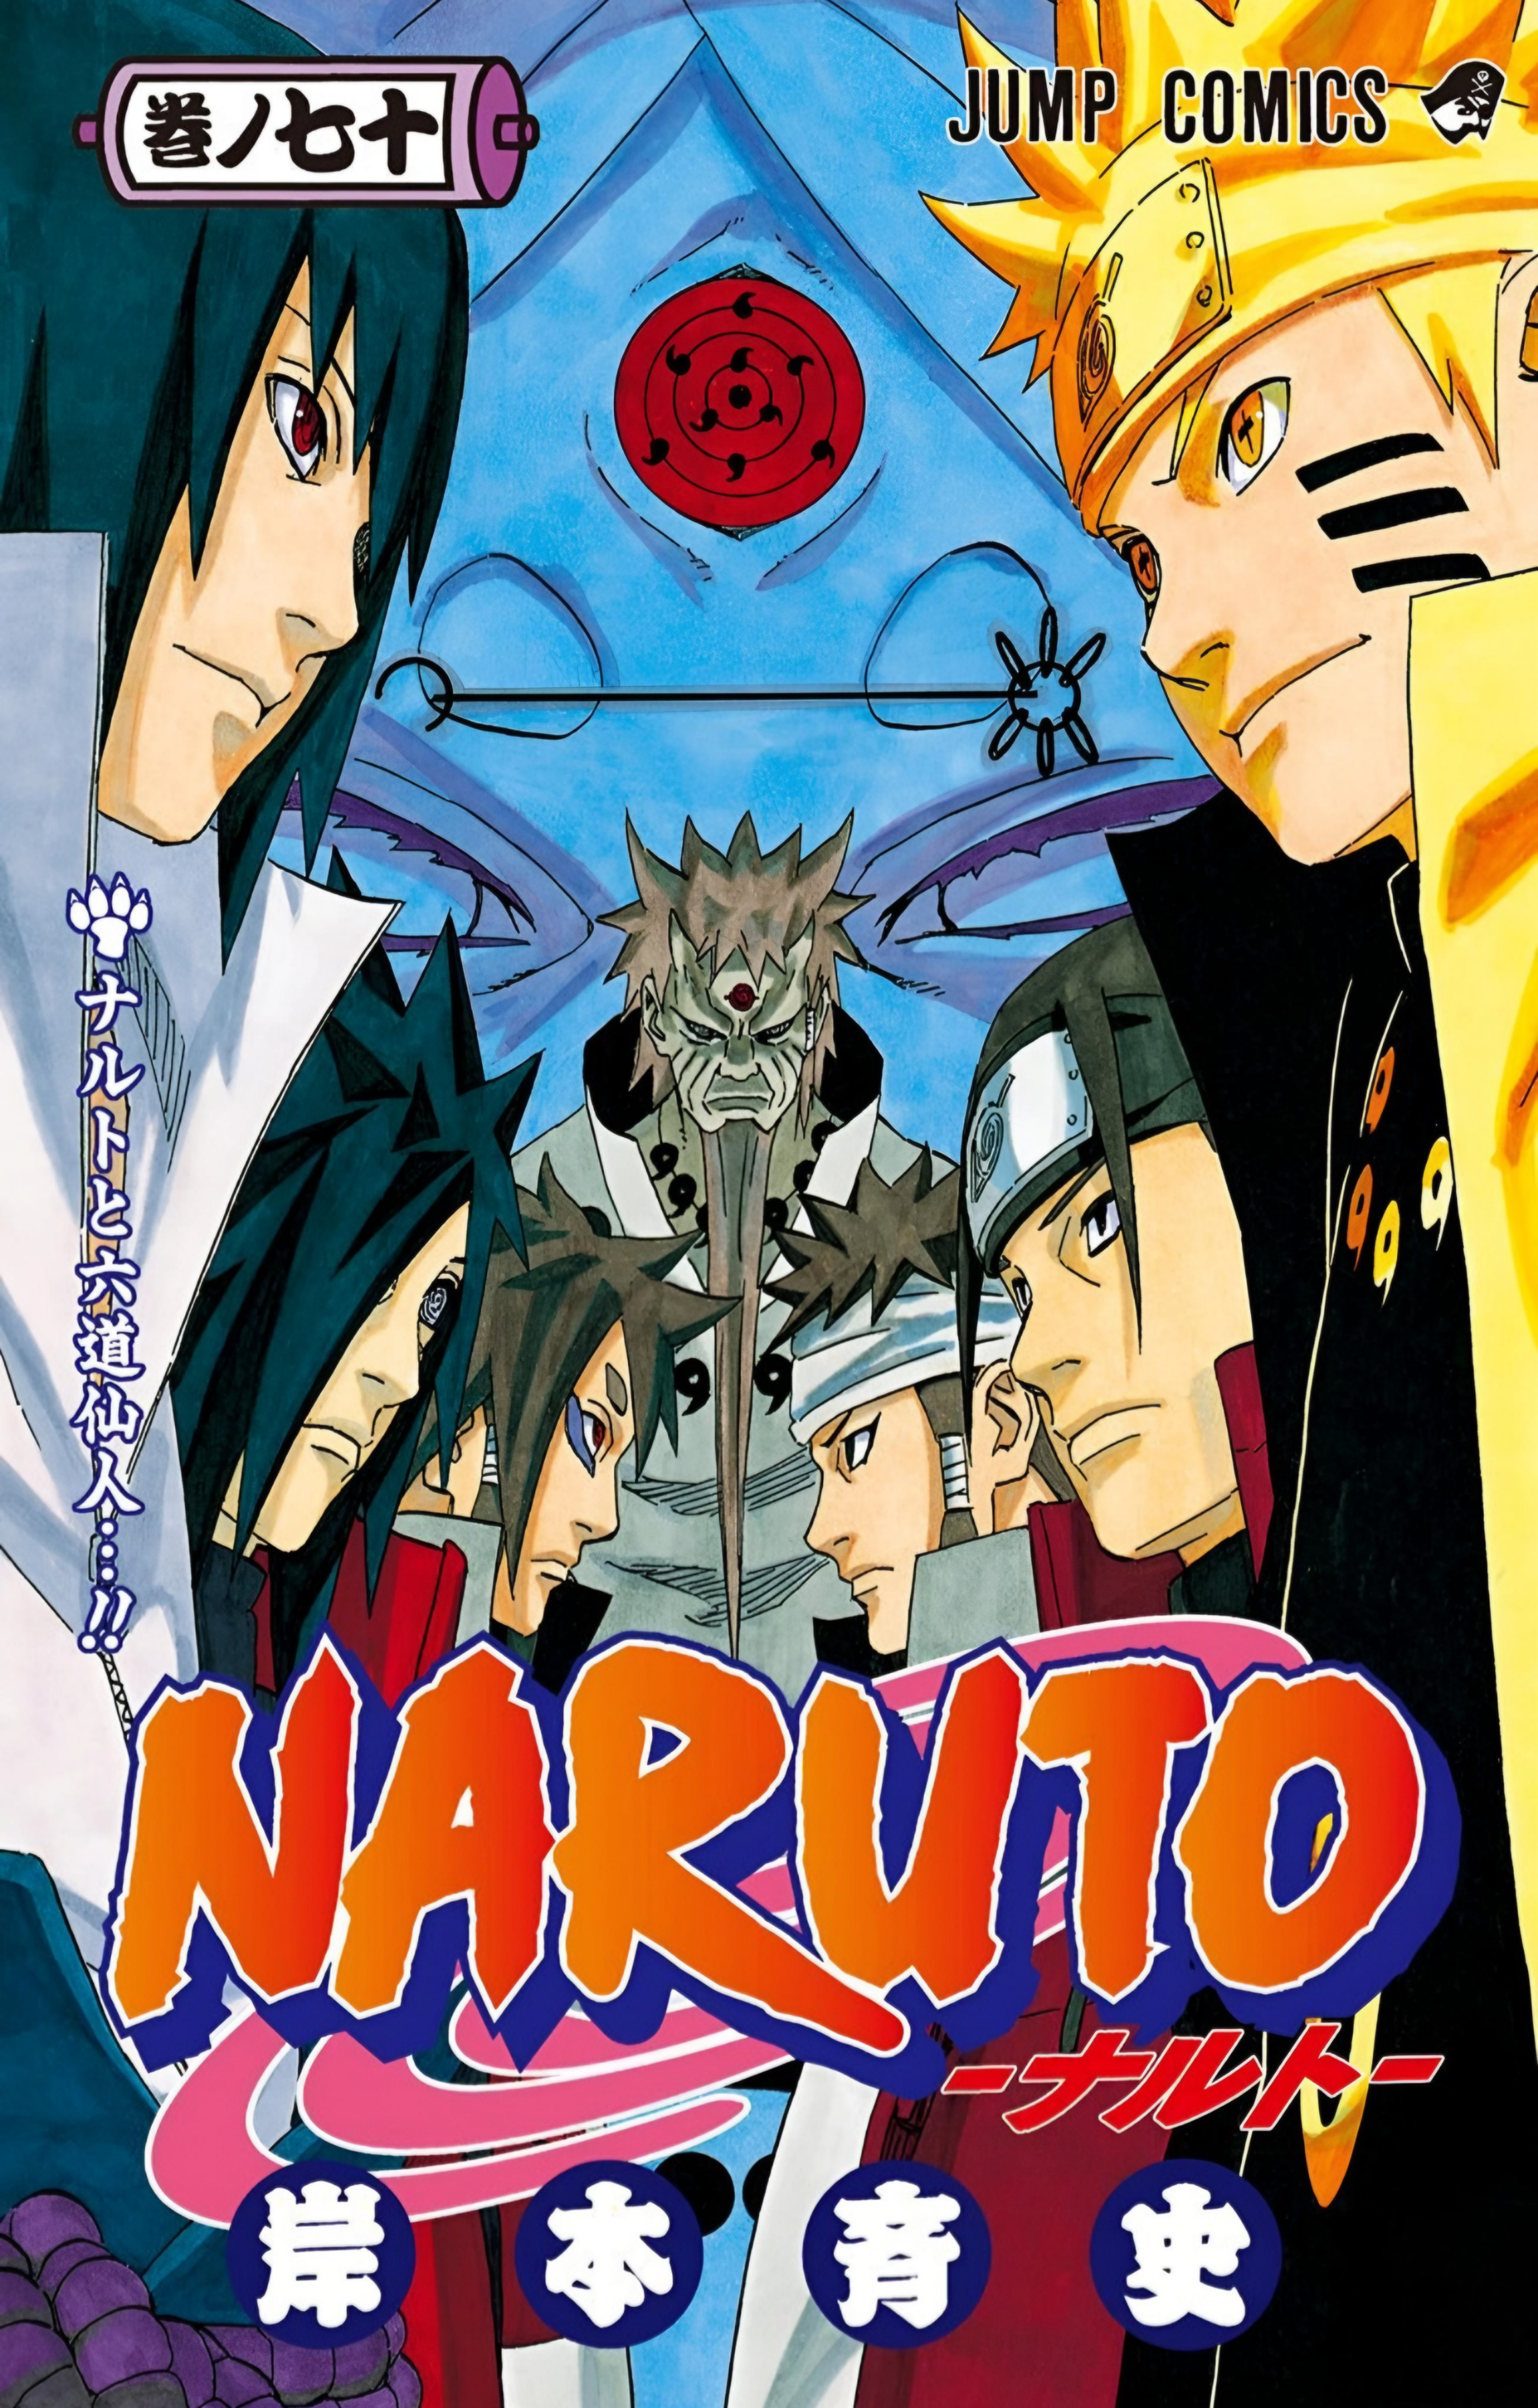 Fóruns Naruto, Manga - Comic strip, Roleplay forums